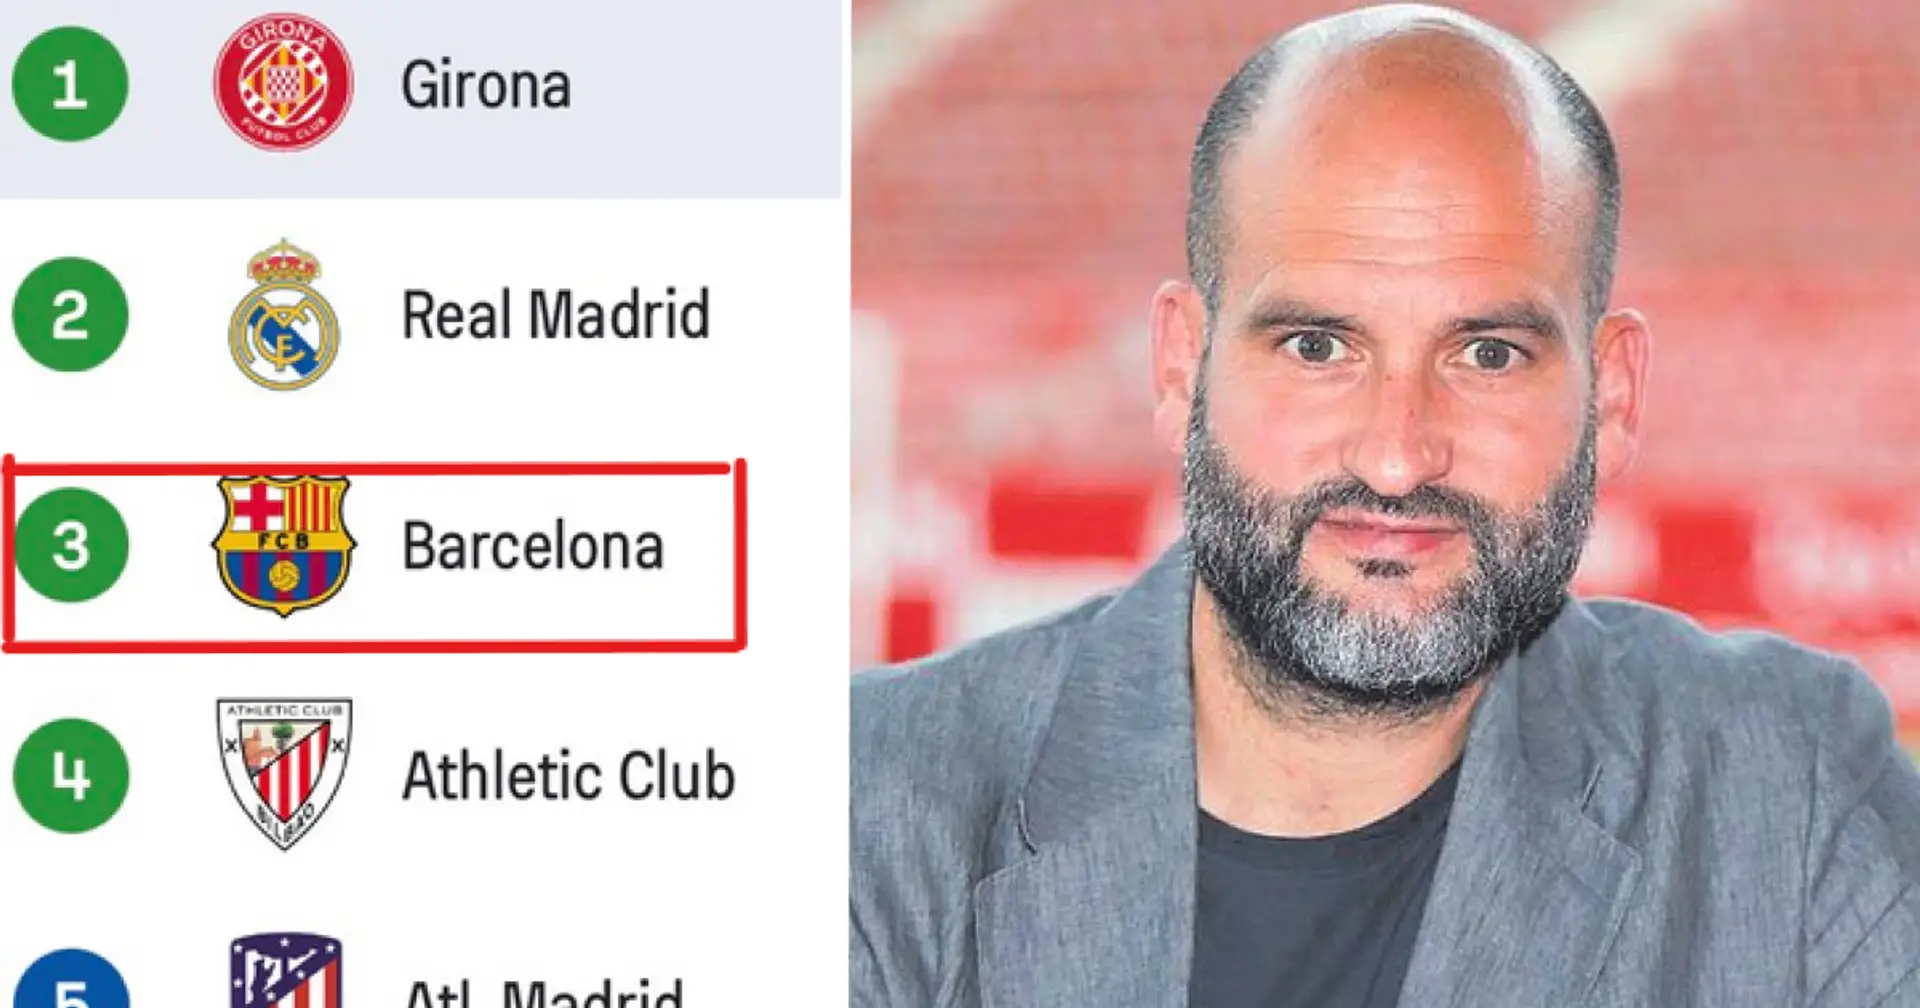 Pep Guardiola's brother rates Girona above Barcelona